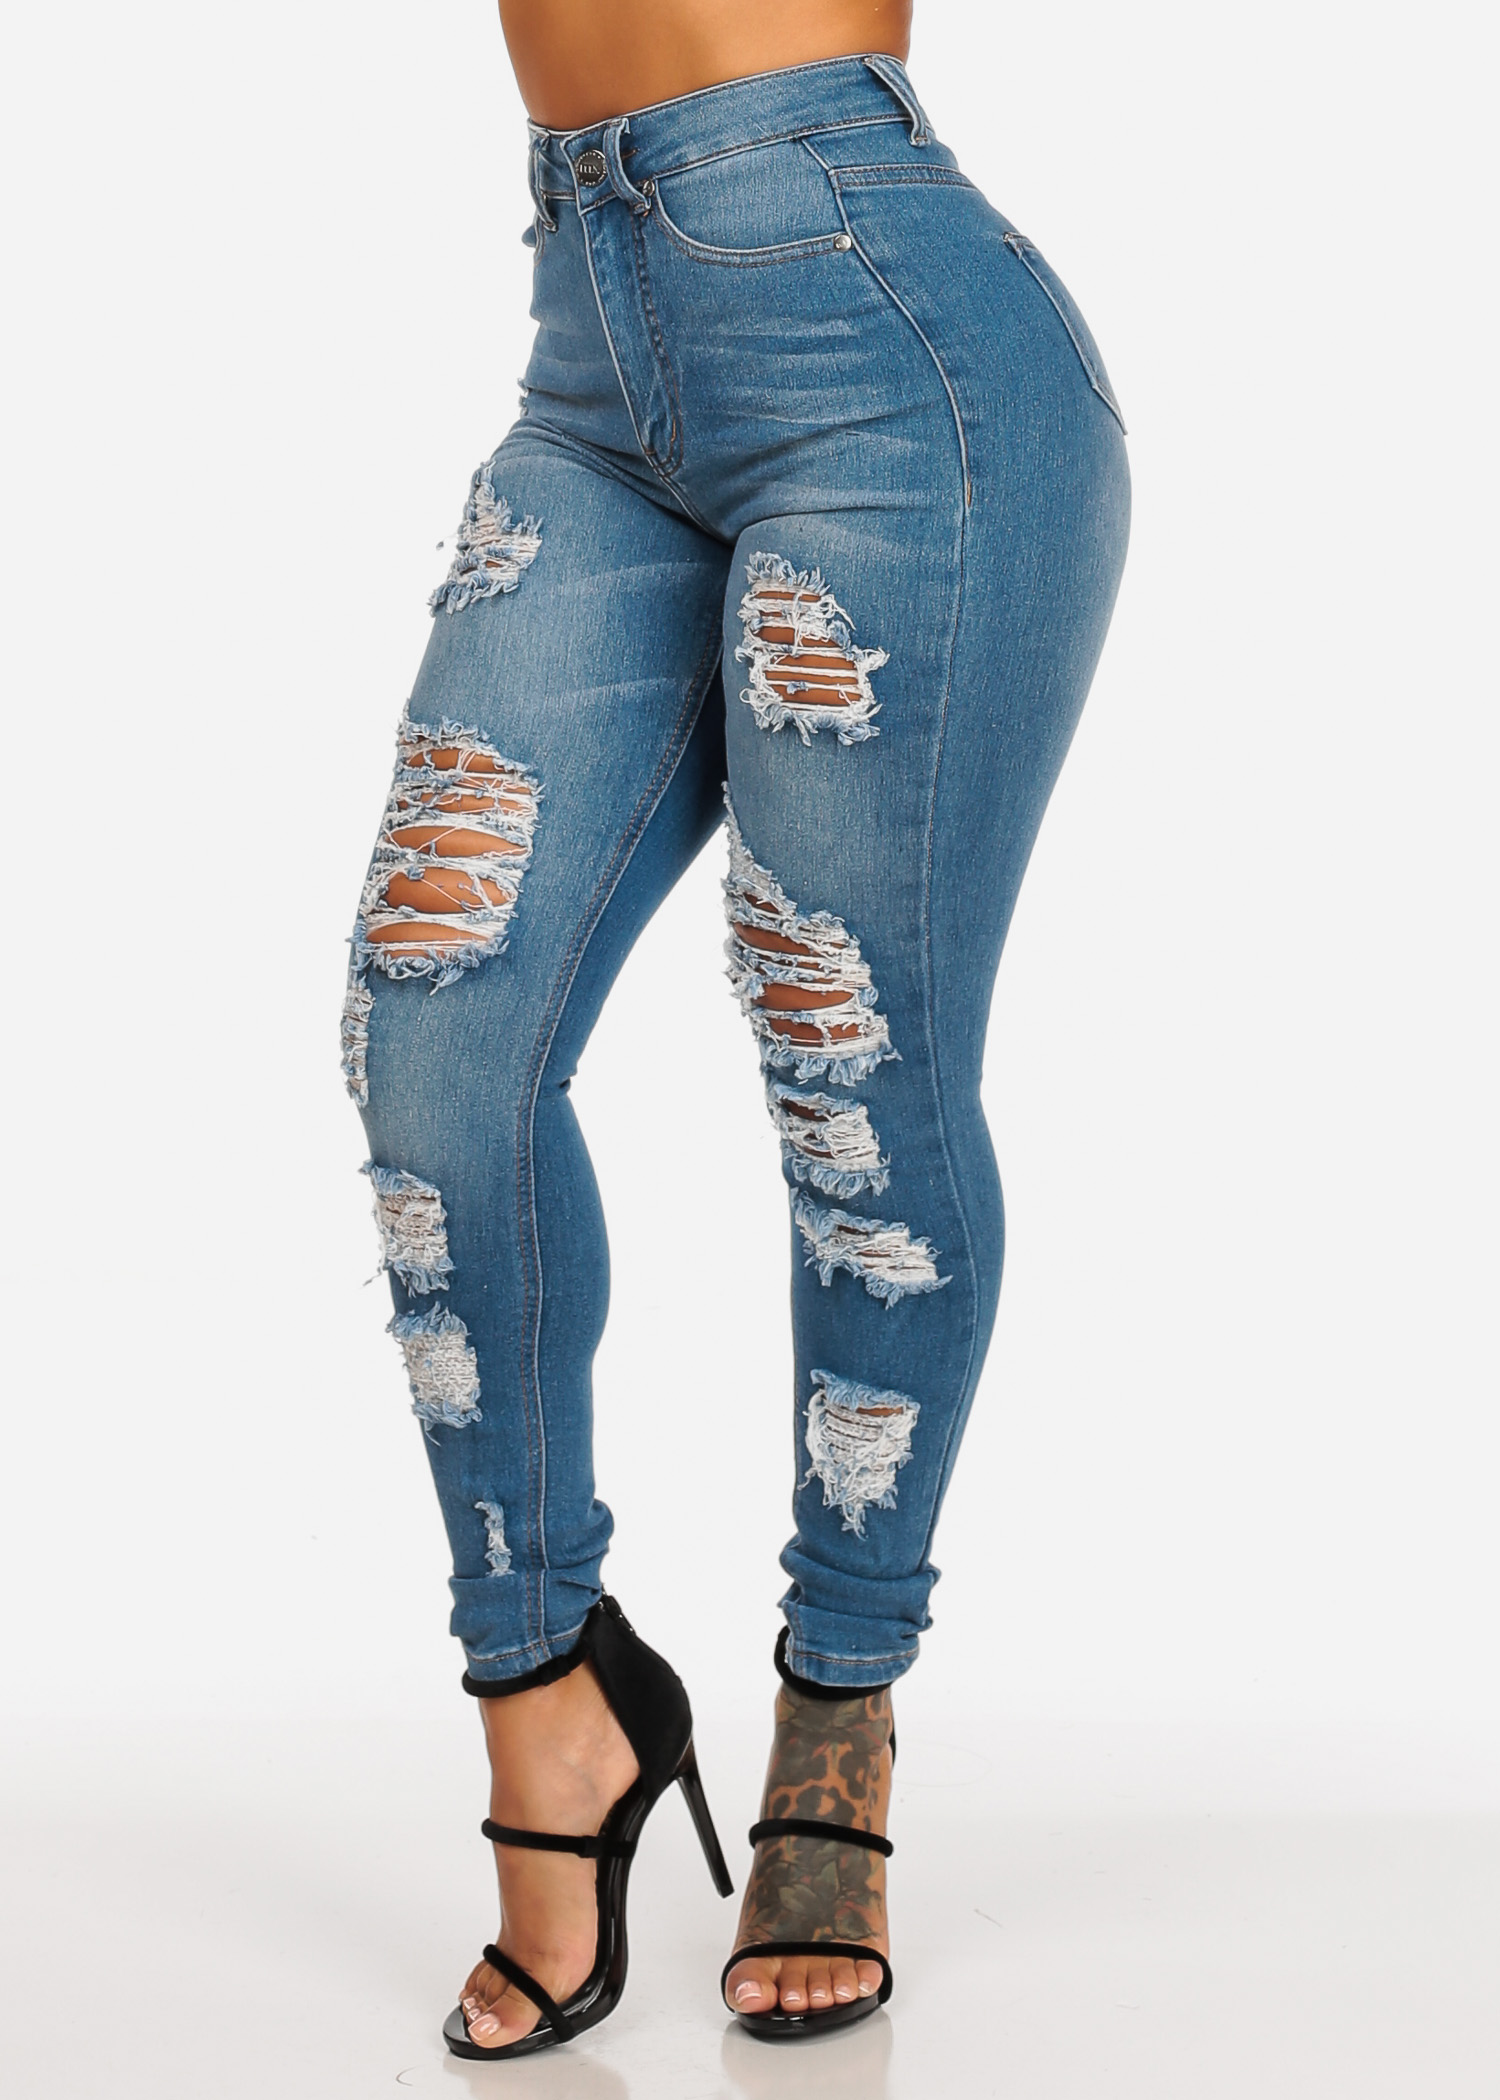 Moda Xpress Women Juniors Blue Ultra High Rise Female Skinny Jeans 10583W - image 1 of 4